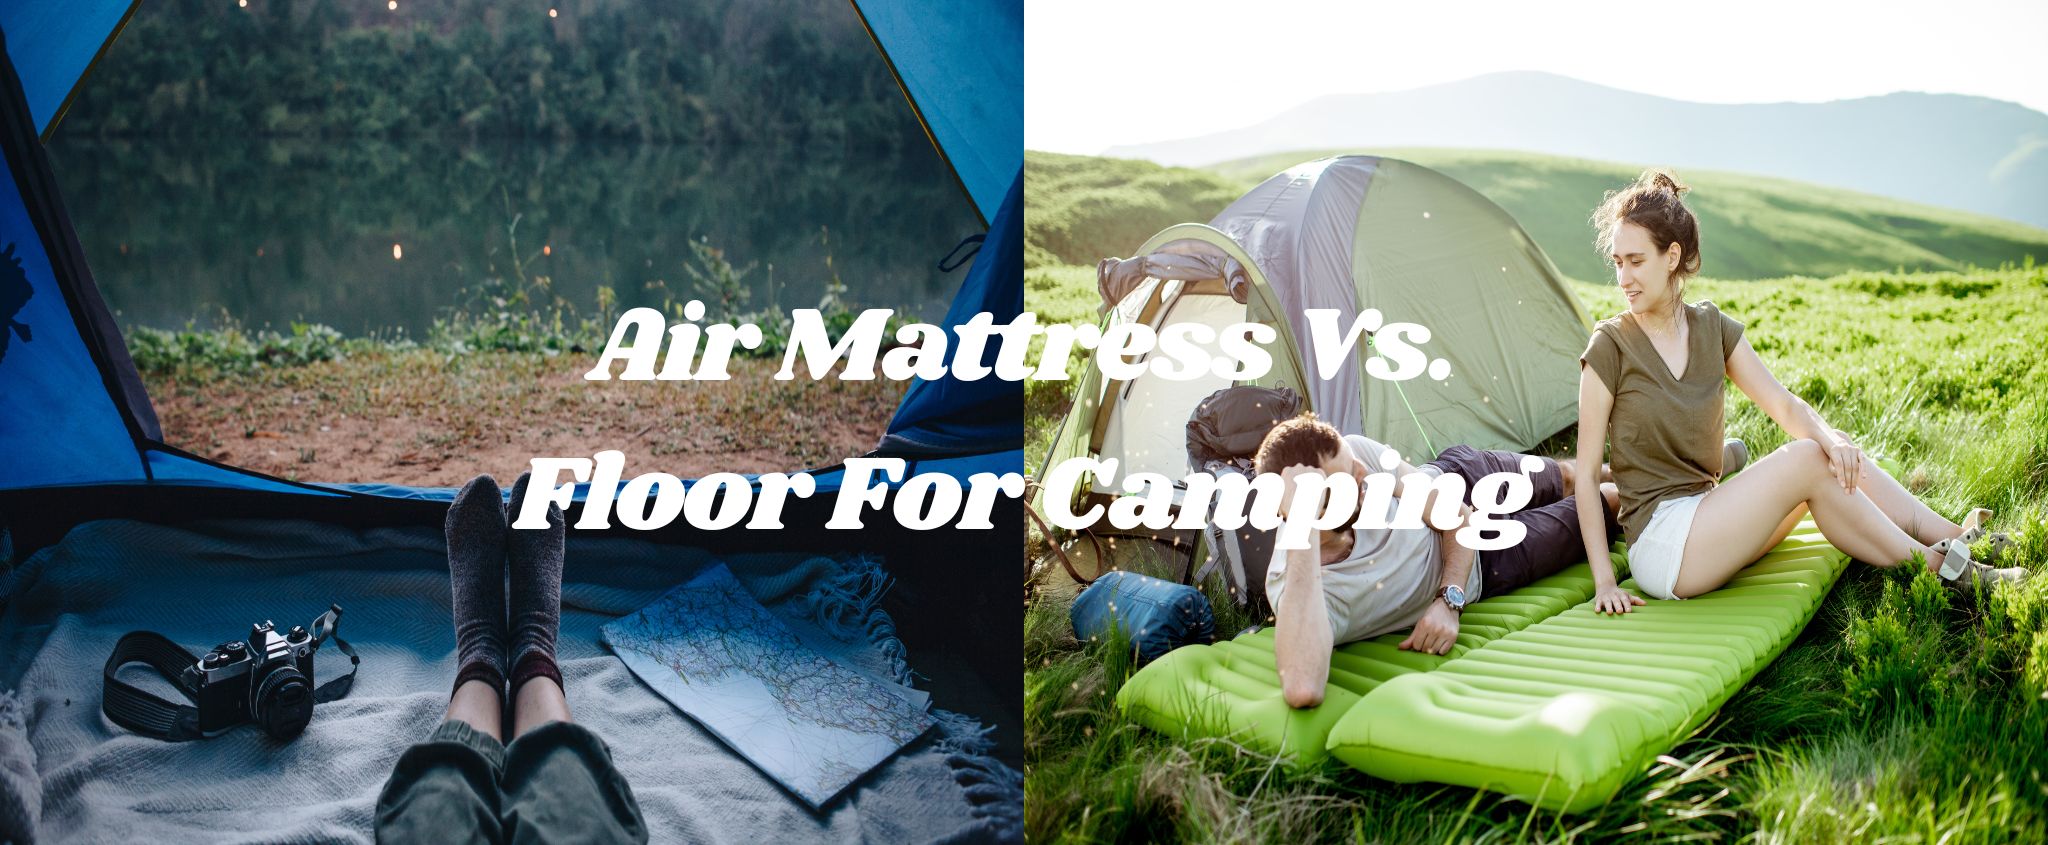 air mattress vs floor